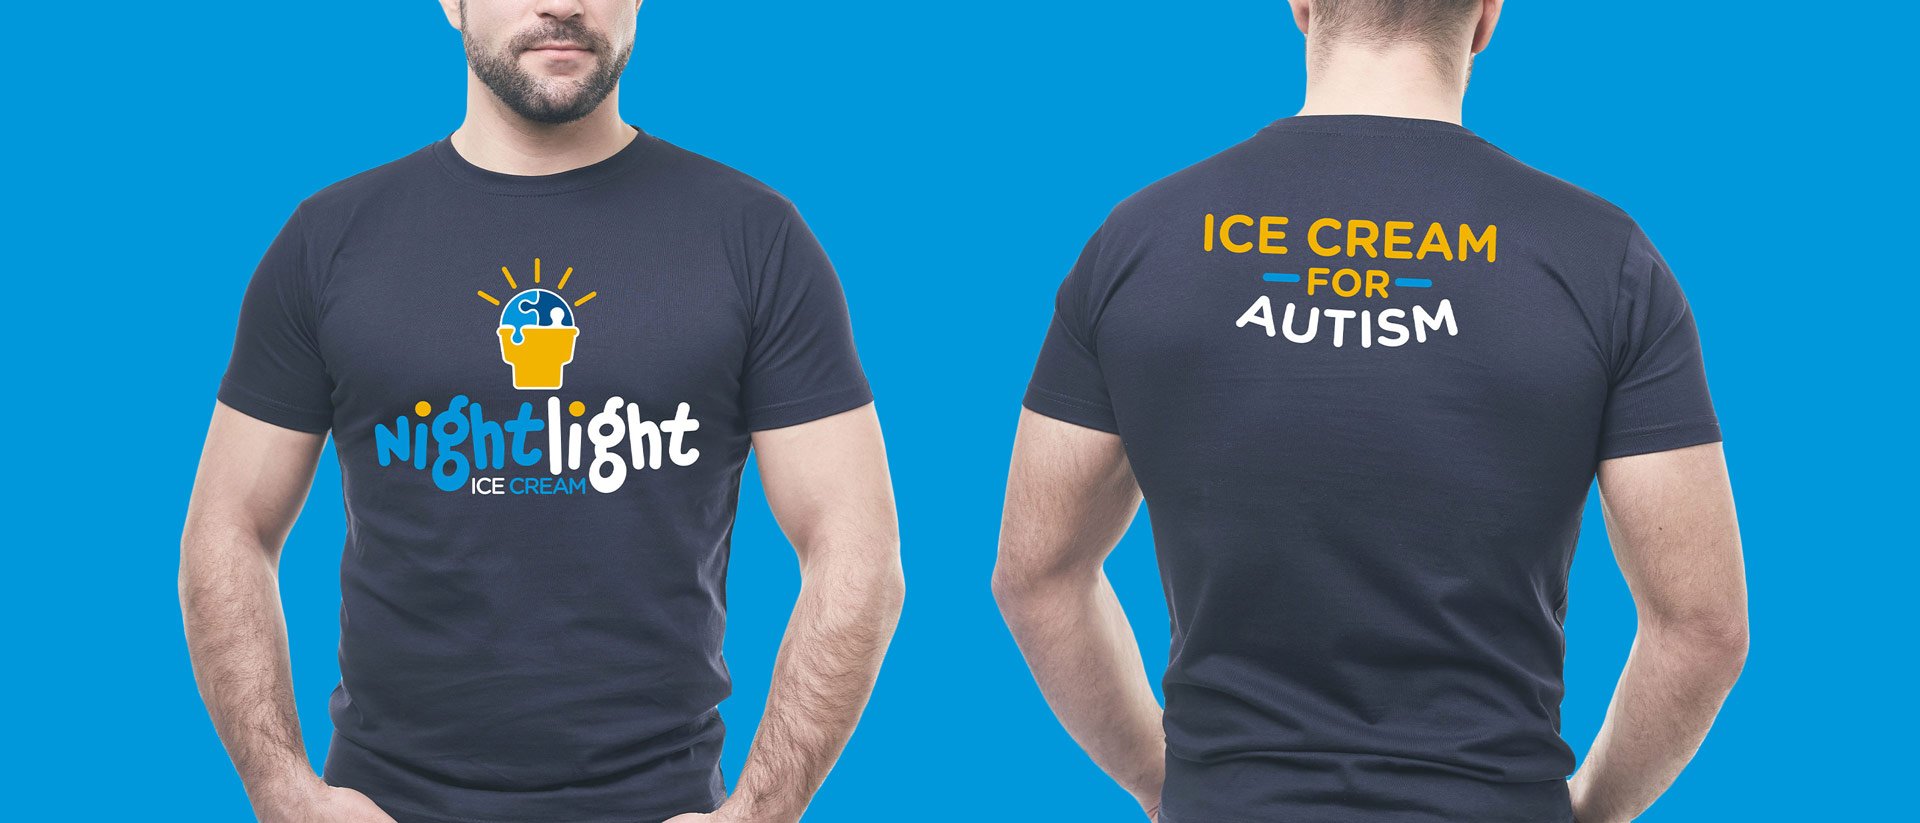 Brand Identity for Nightlight Ice Cream for Autism